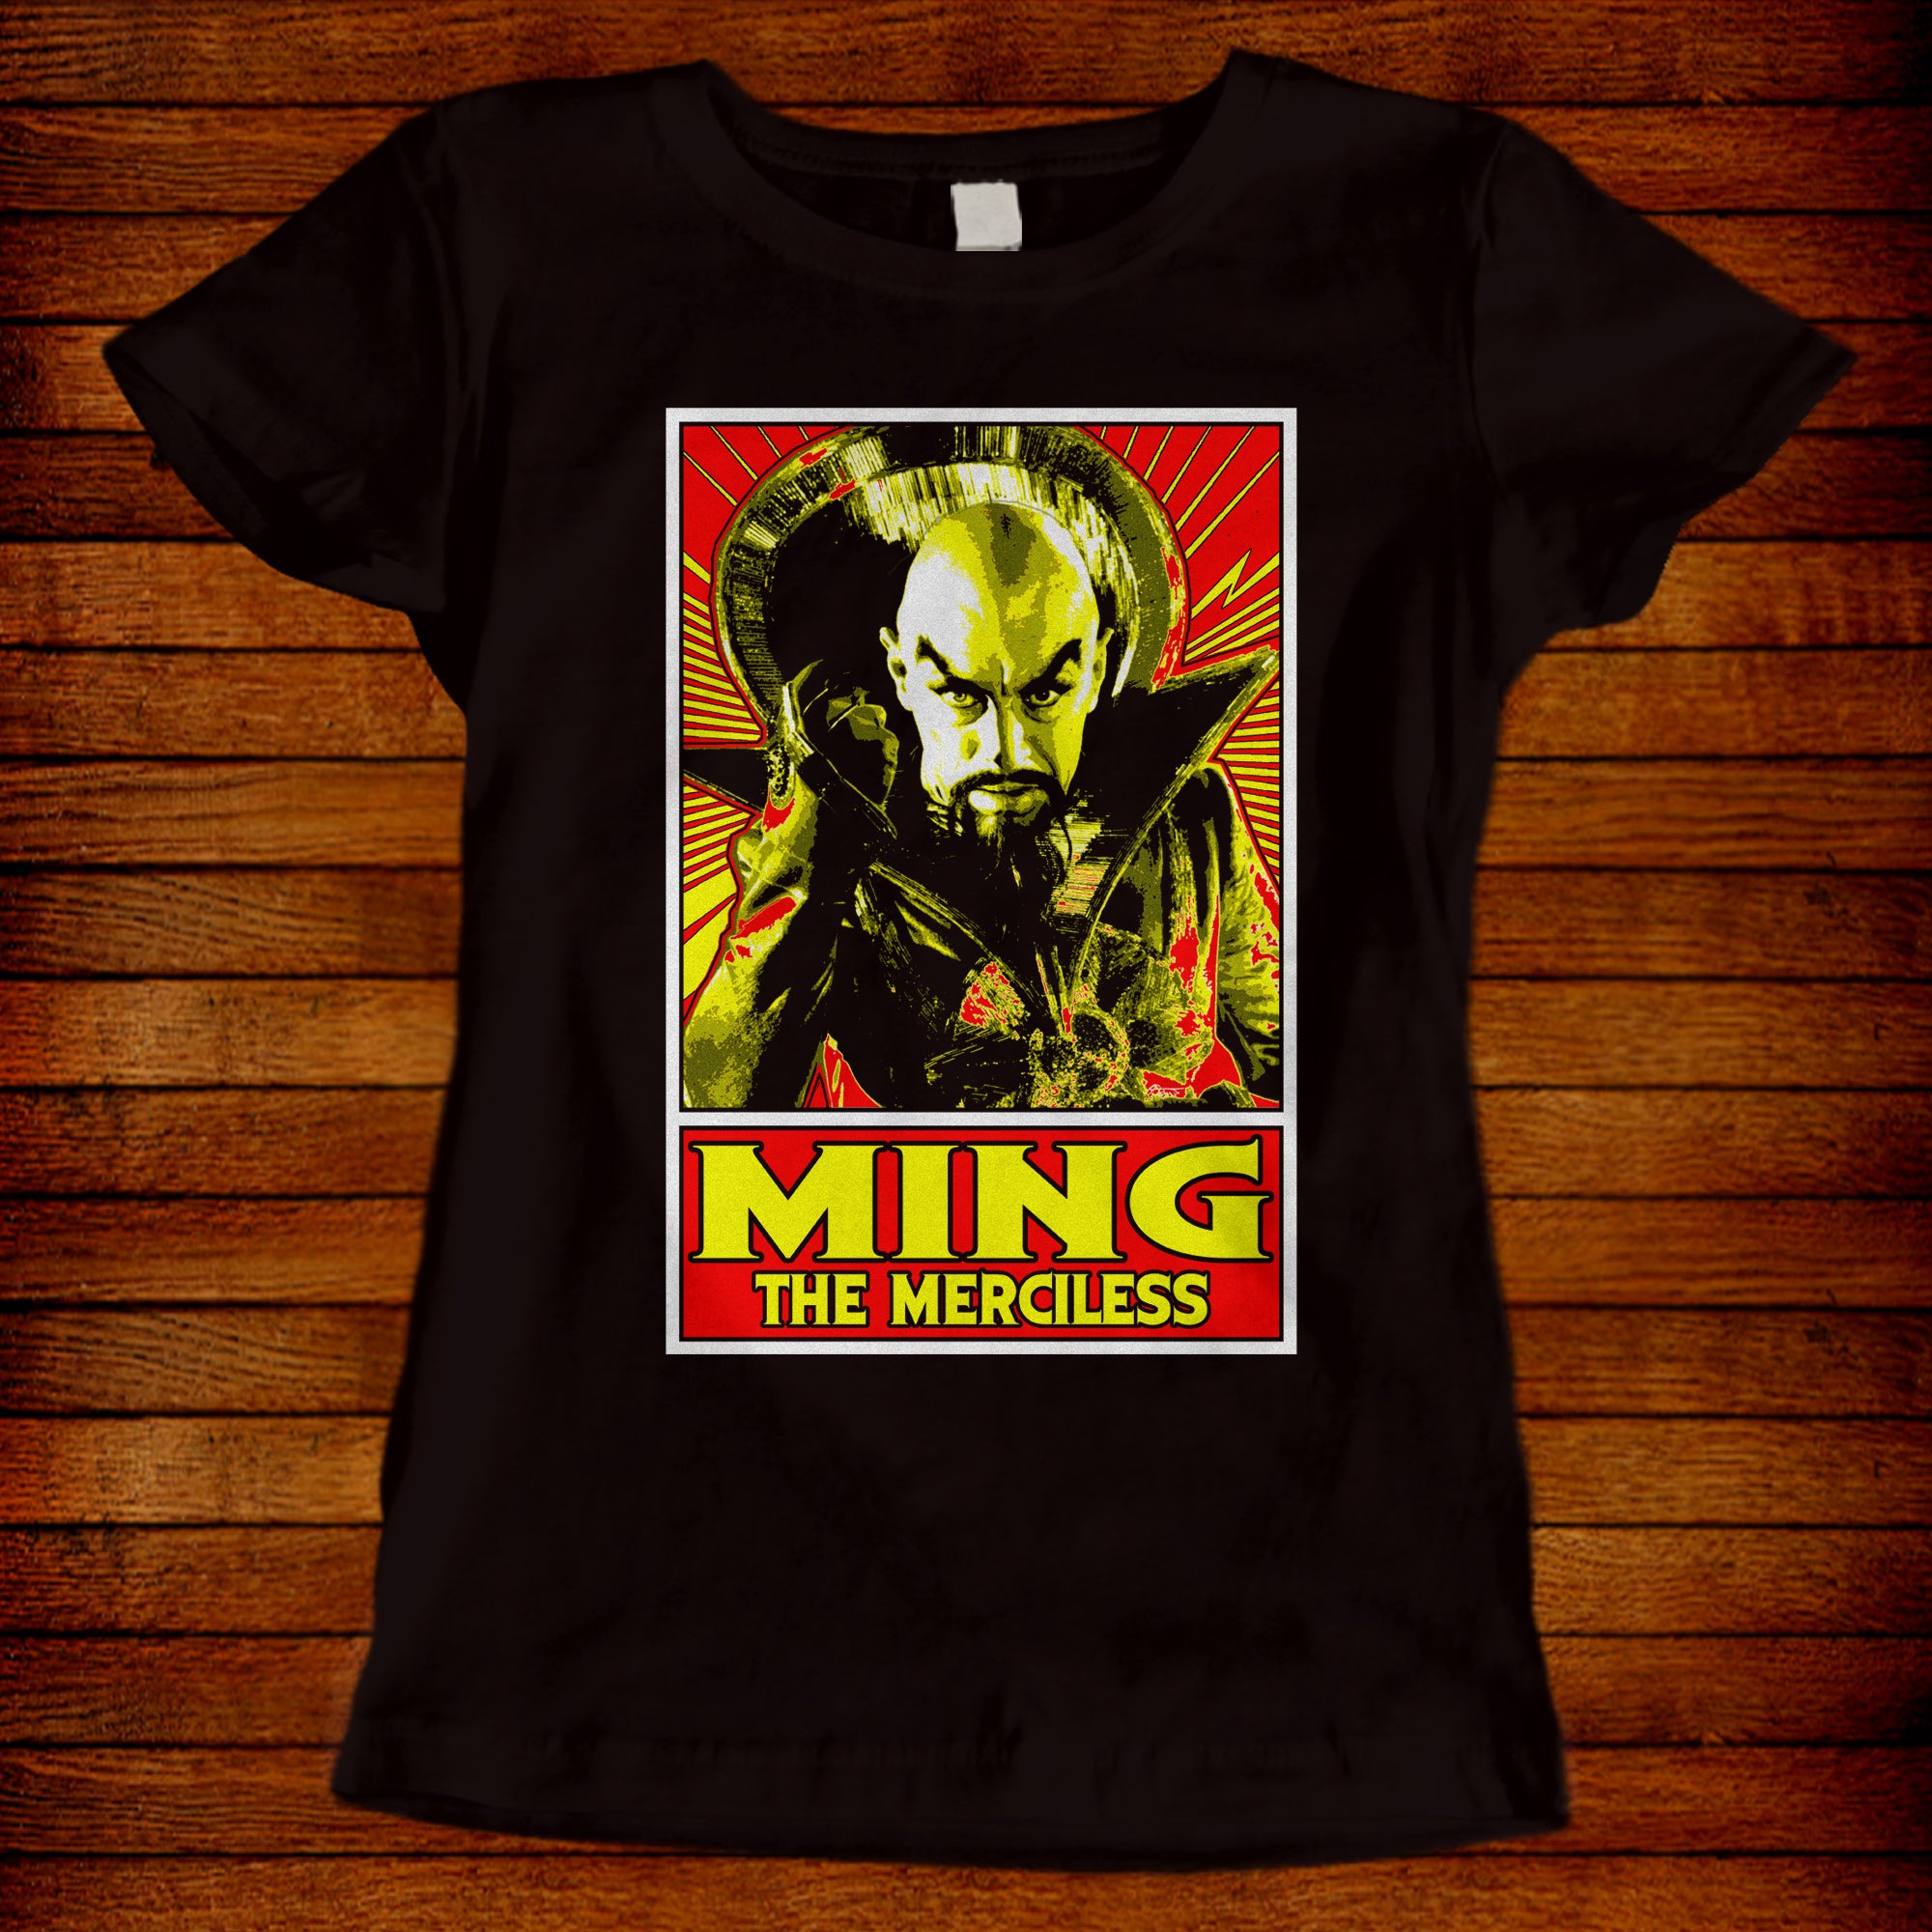 Flash Gordon T-shirt Ming the Merciless